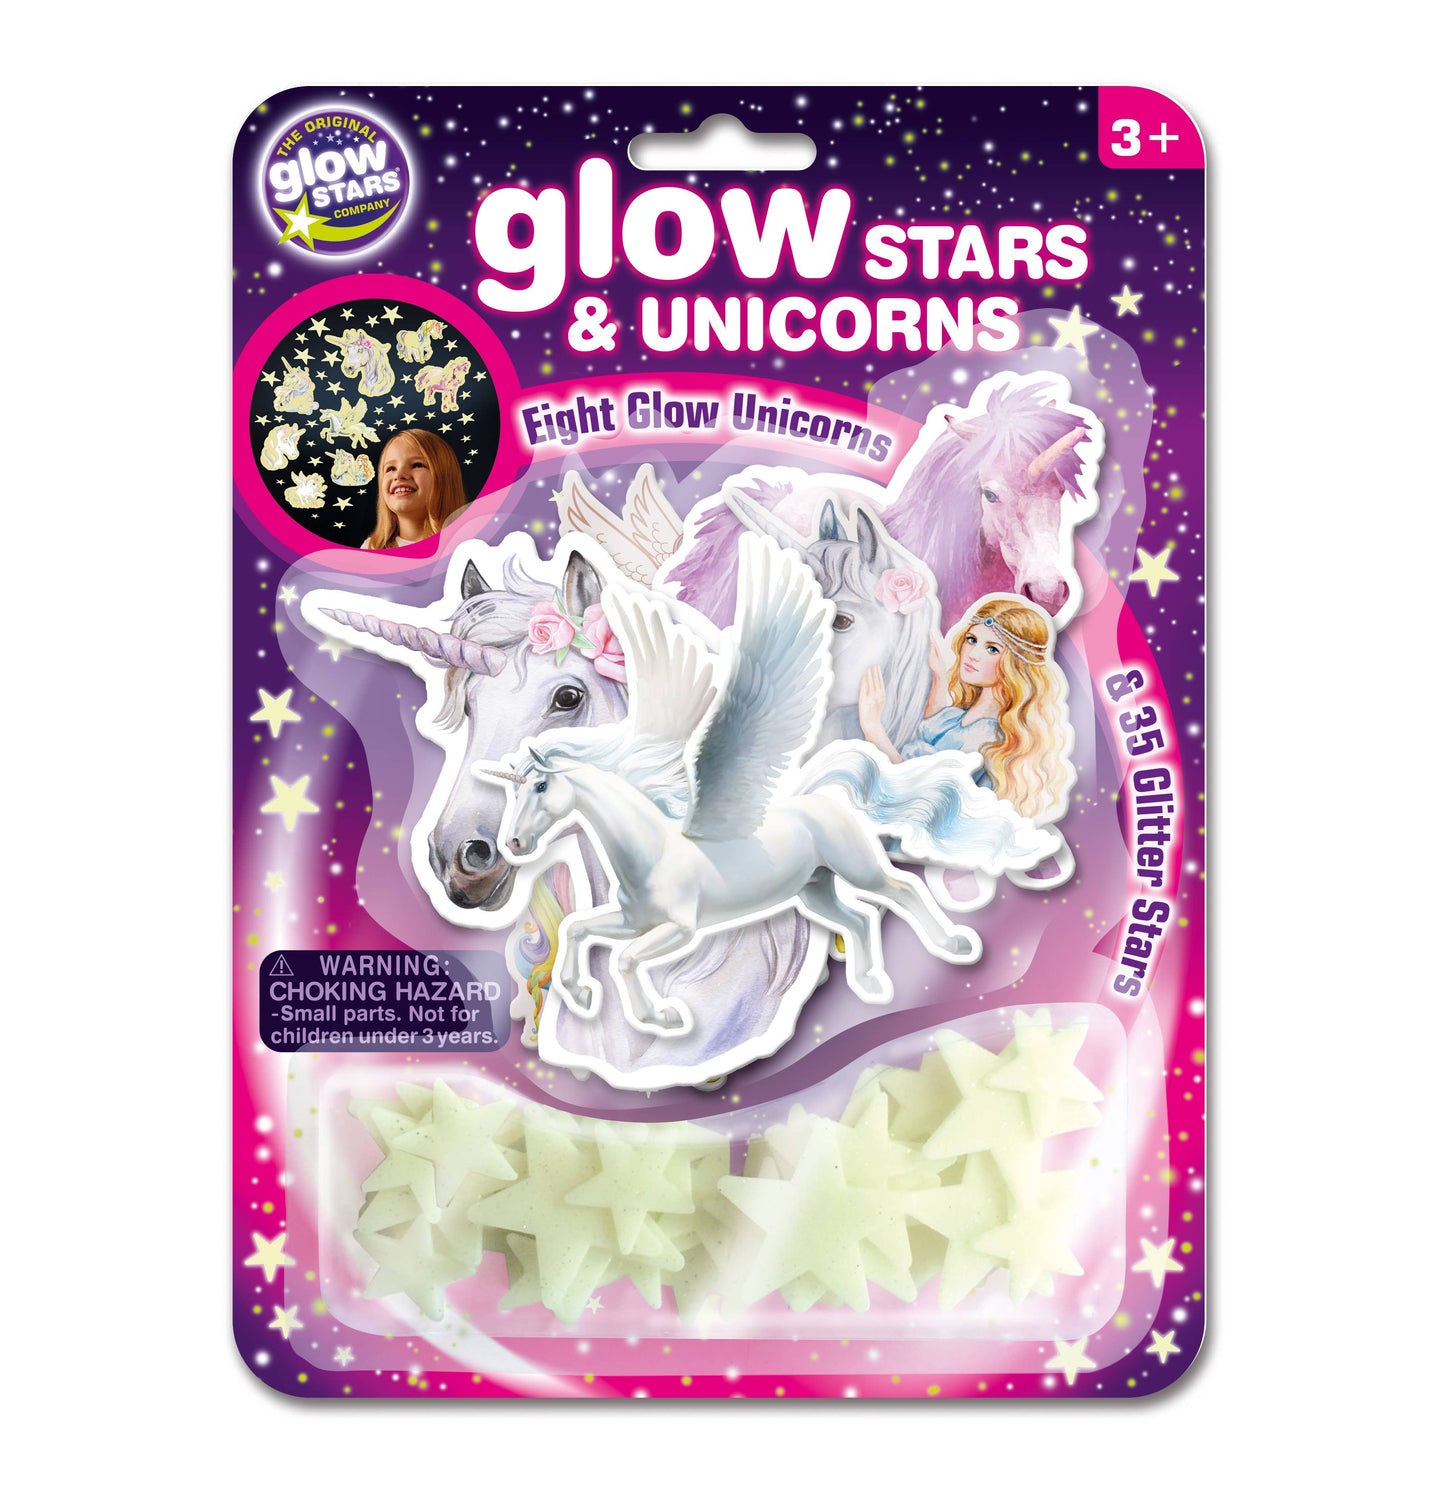 The Original Glow Stars Glow Stars & Unicorns